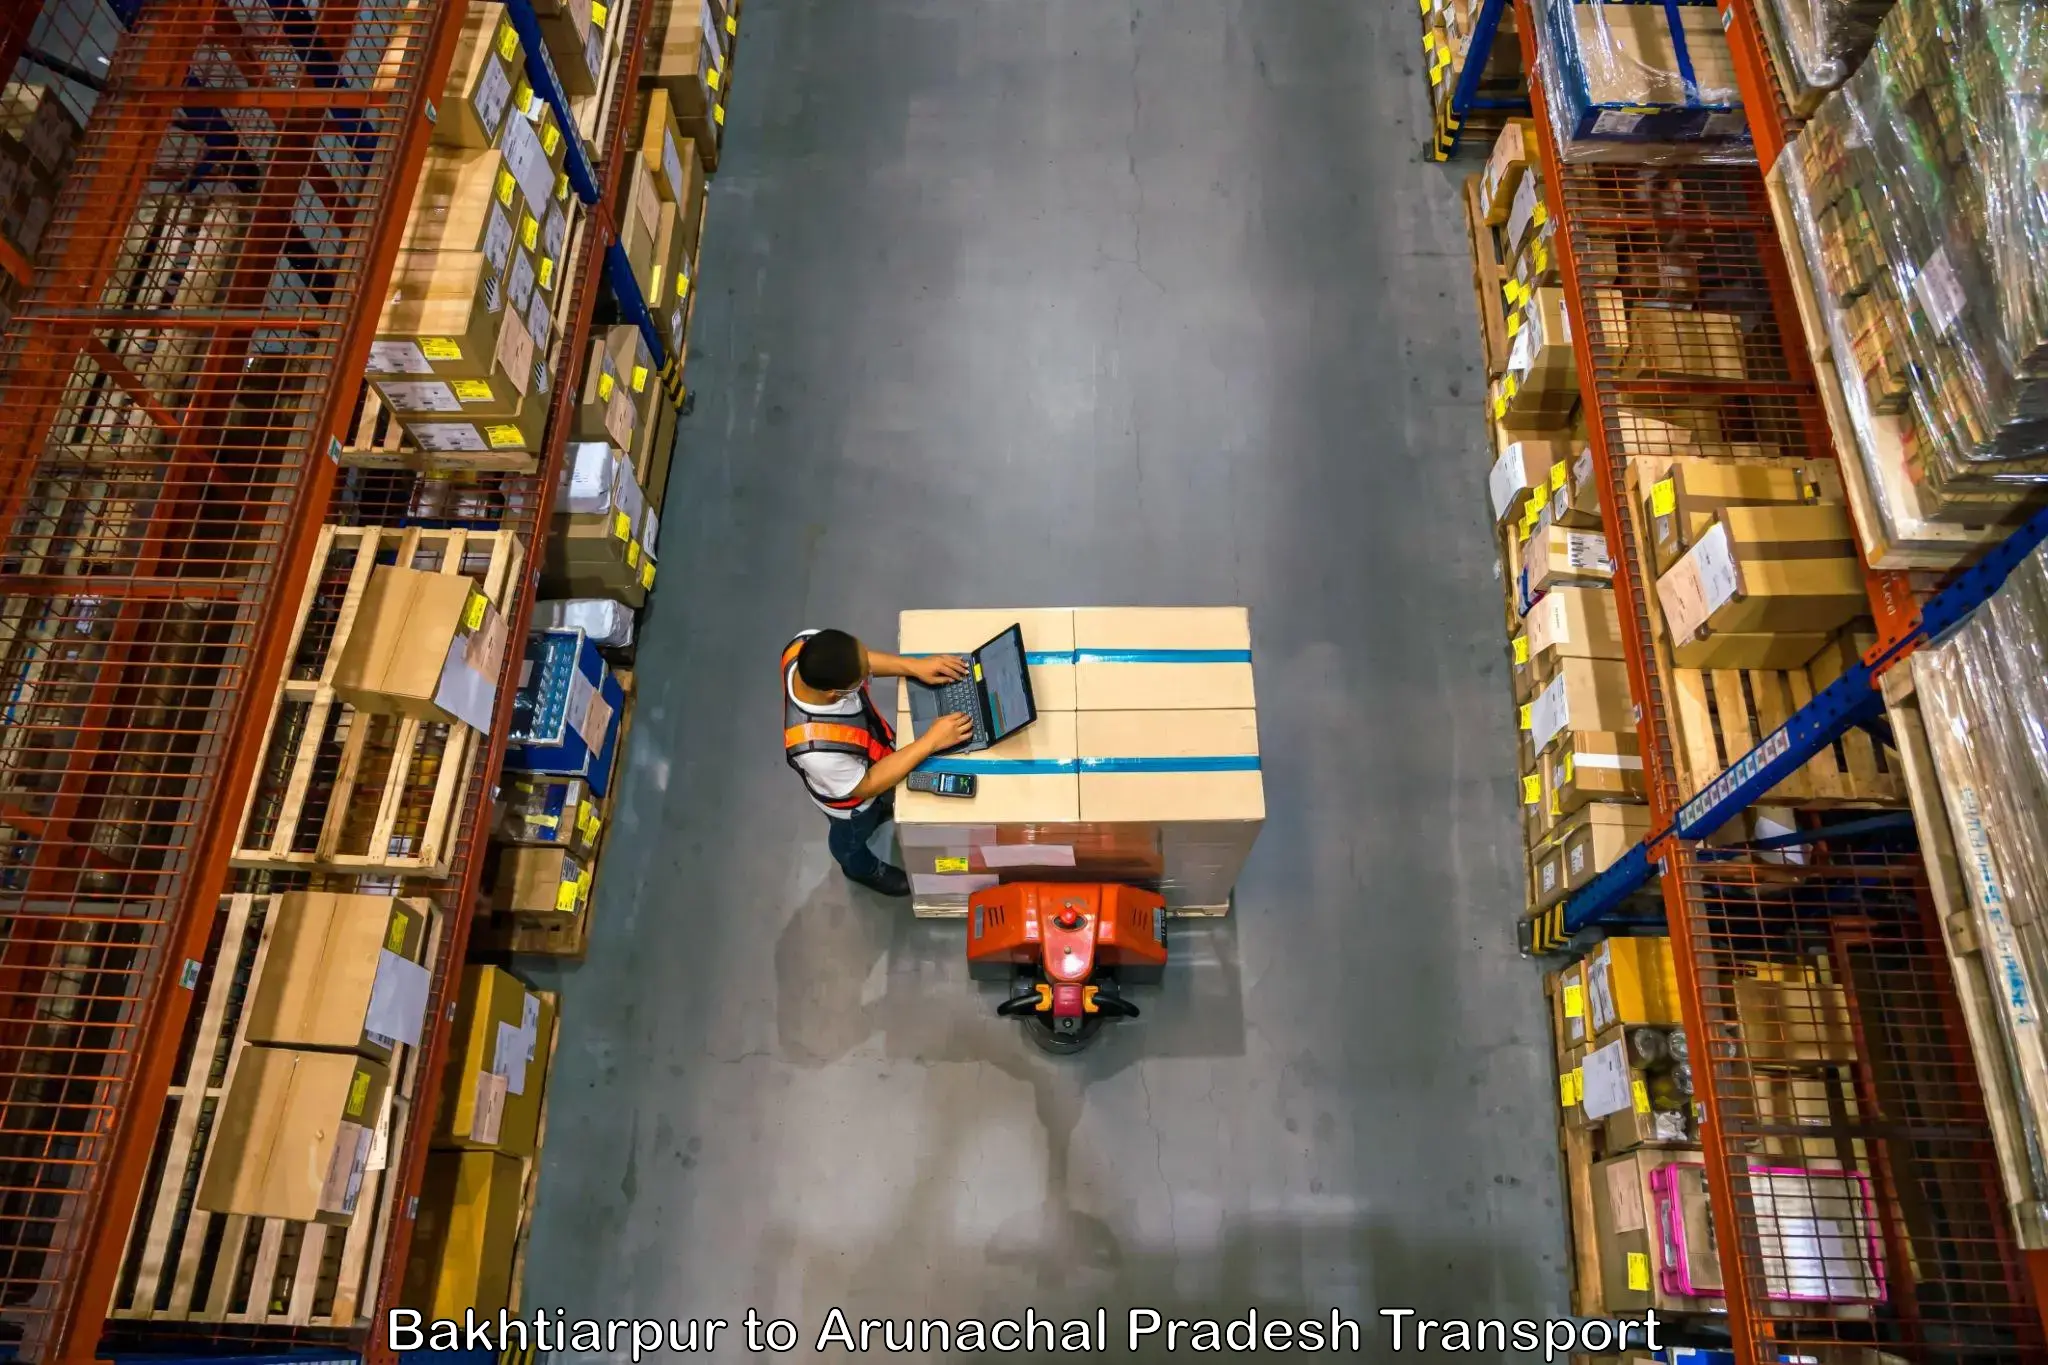 Truck transport companies in India Bakhtiarpur to Pasighat